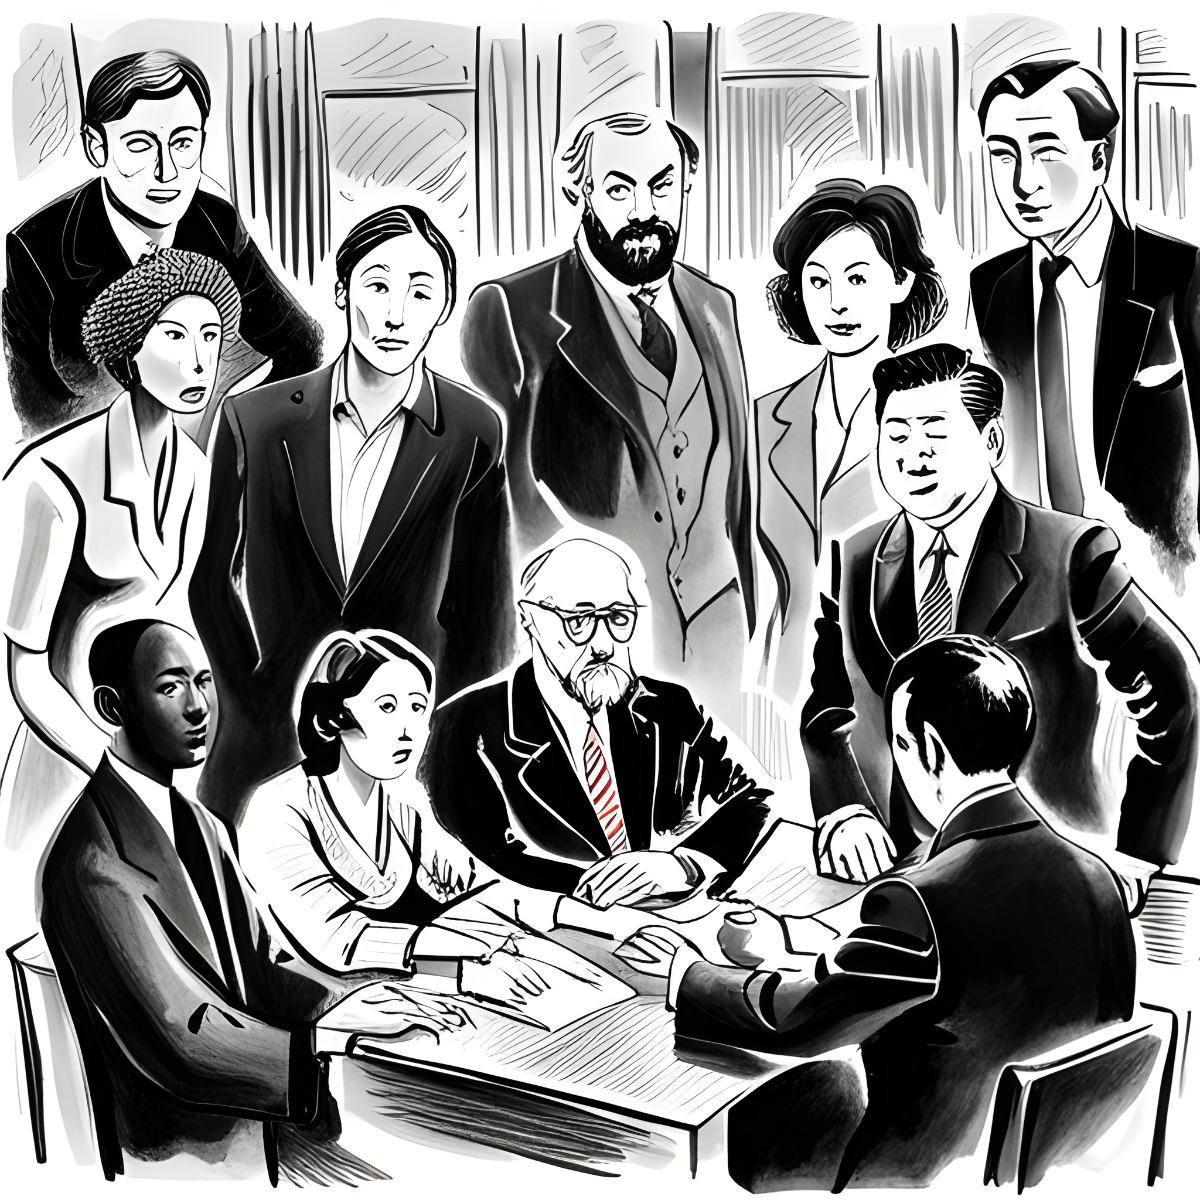 Illustraton of people gathered around a desk